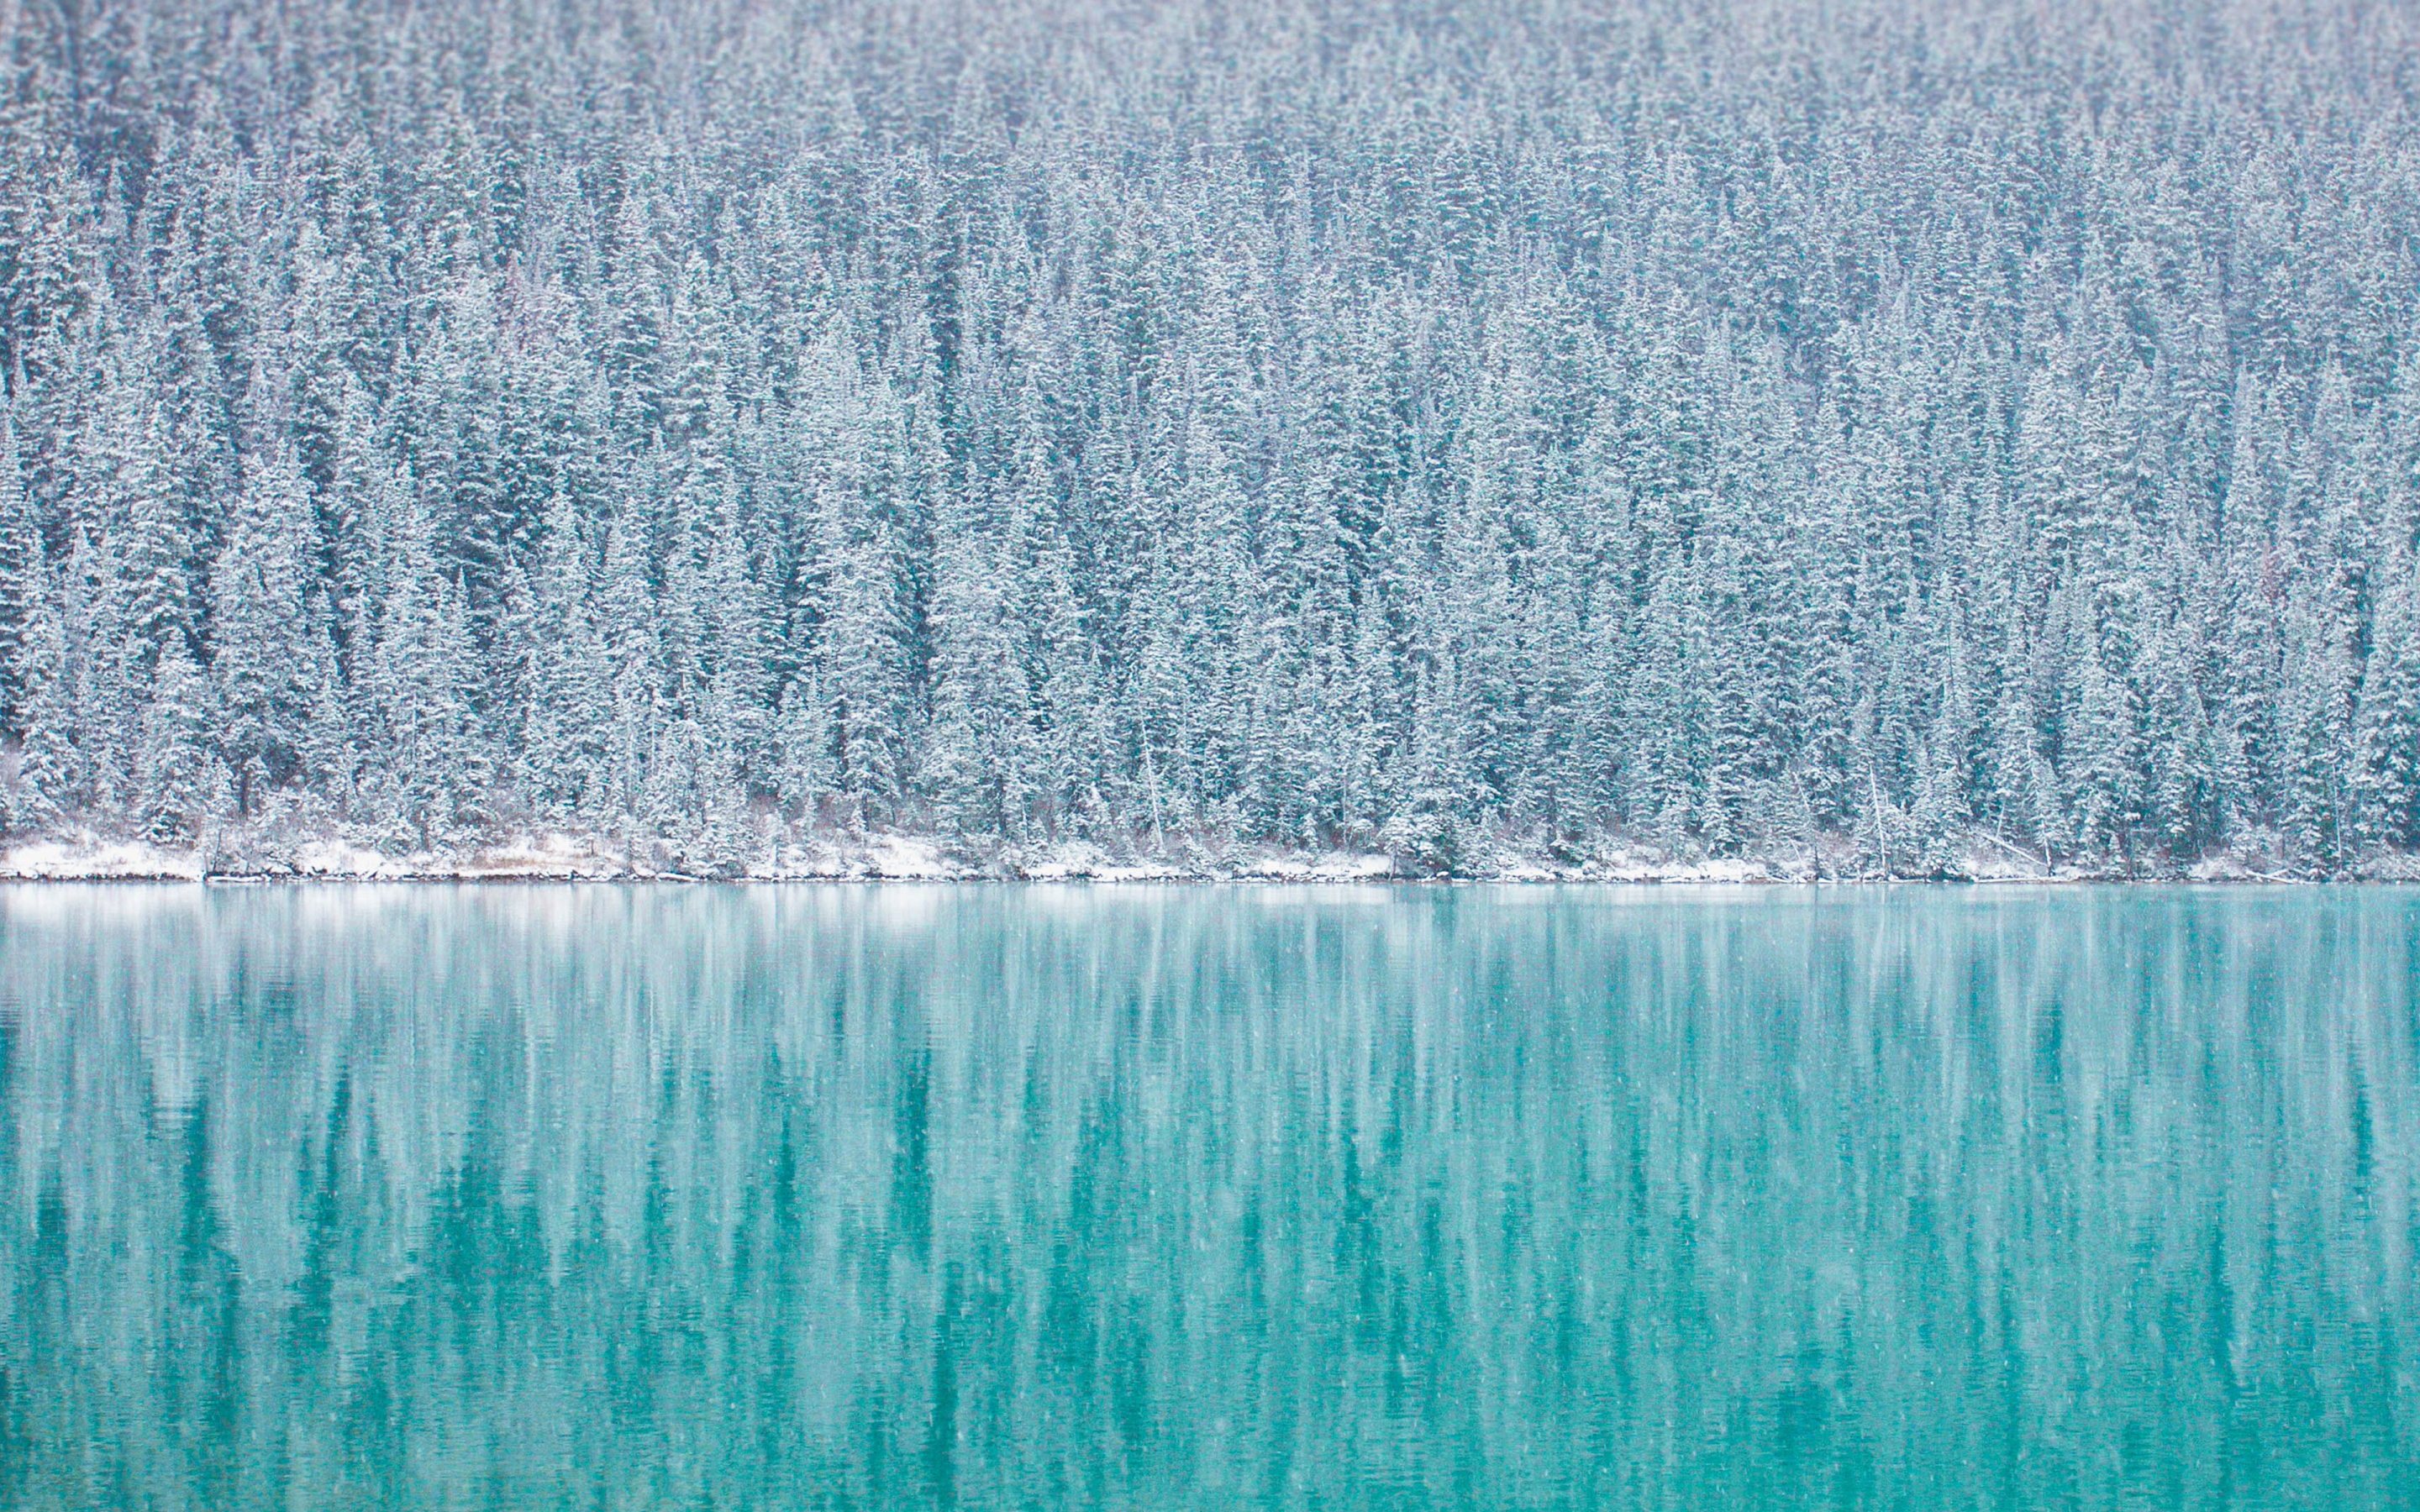 Pine trees, winter, reflections, blue lake, 2880x1800 wallpaper